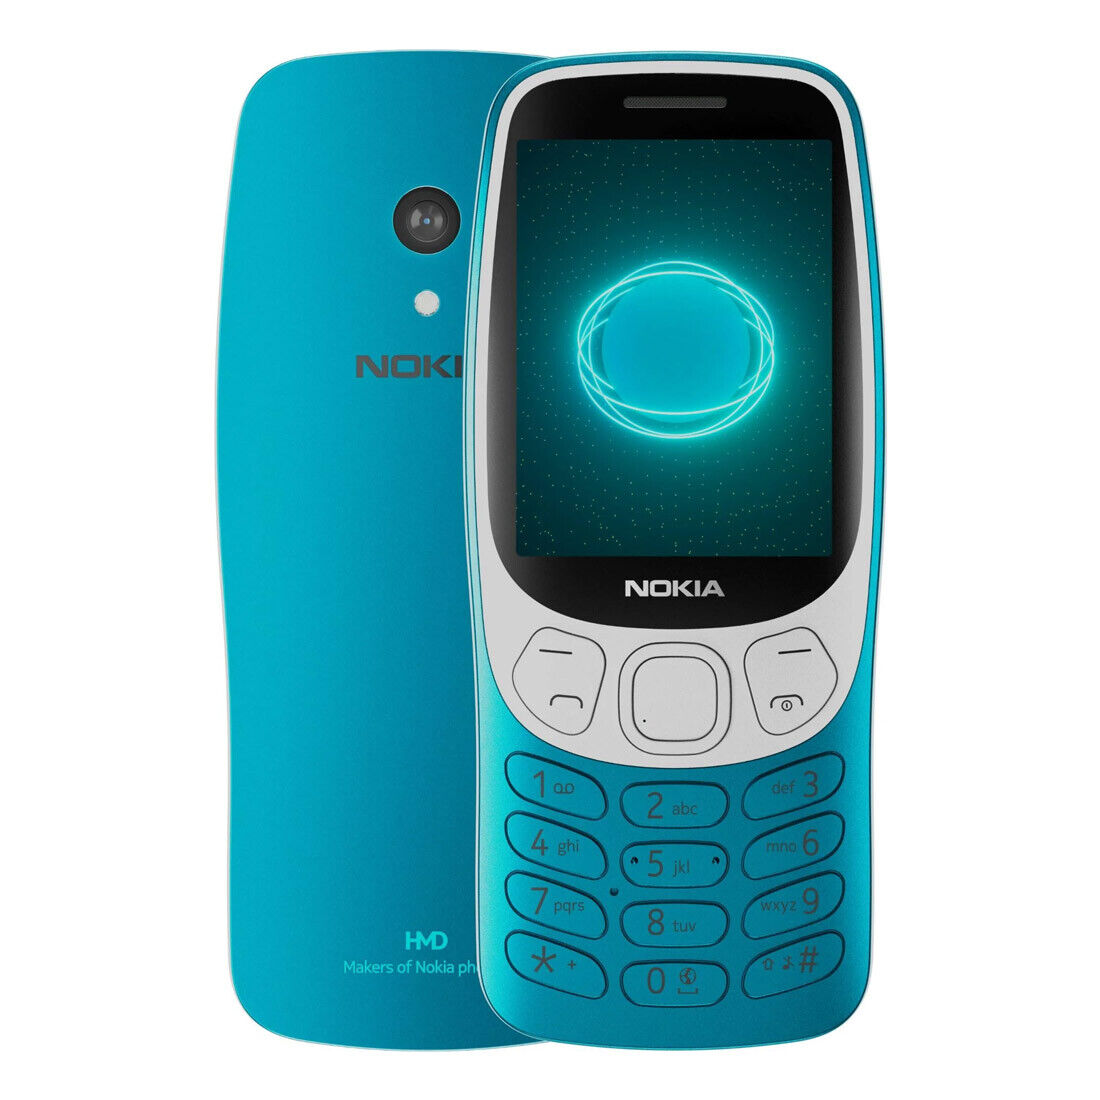 Nokia 3210 4G (Dual Sim, 2.4'', Keypad) - Scuba Blue